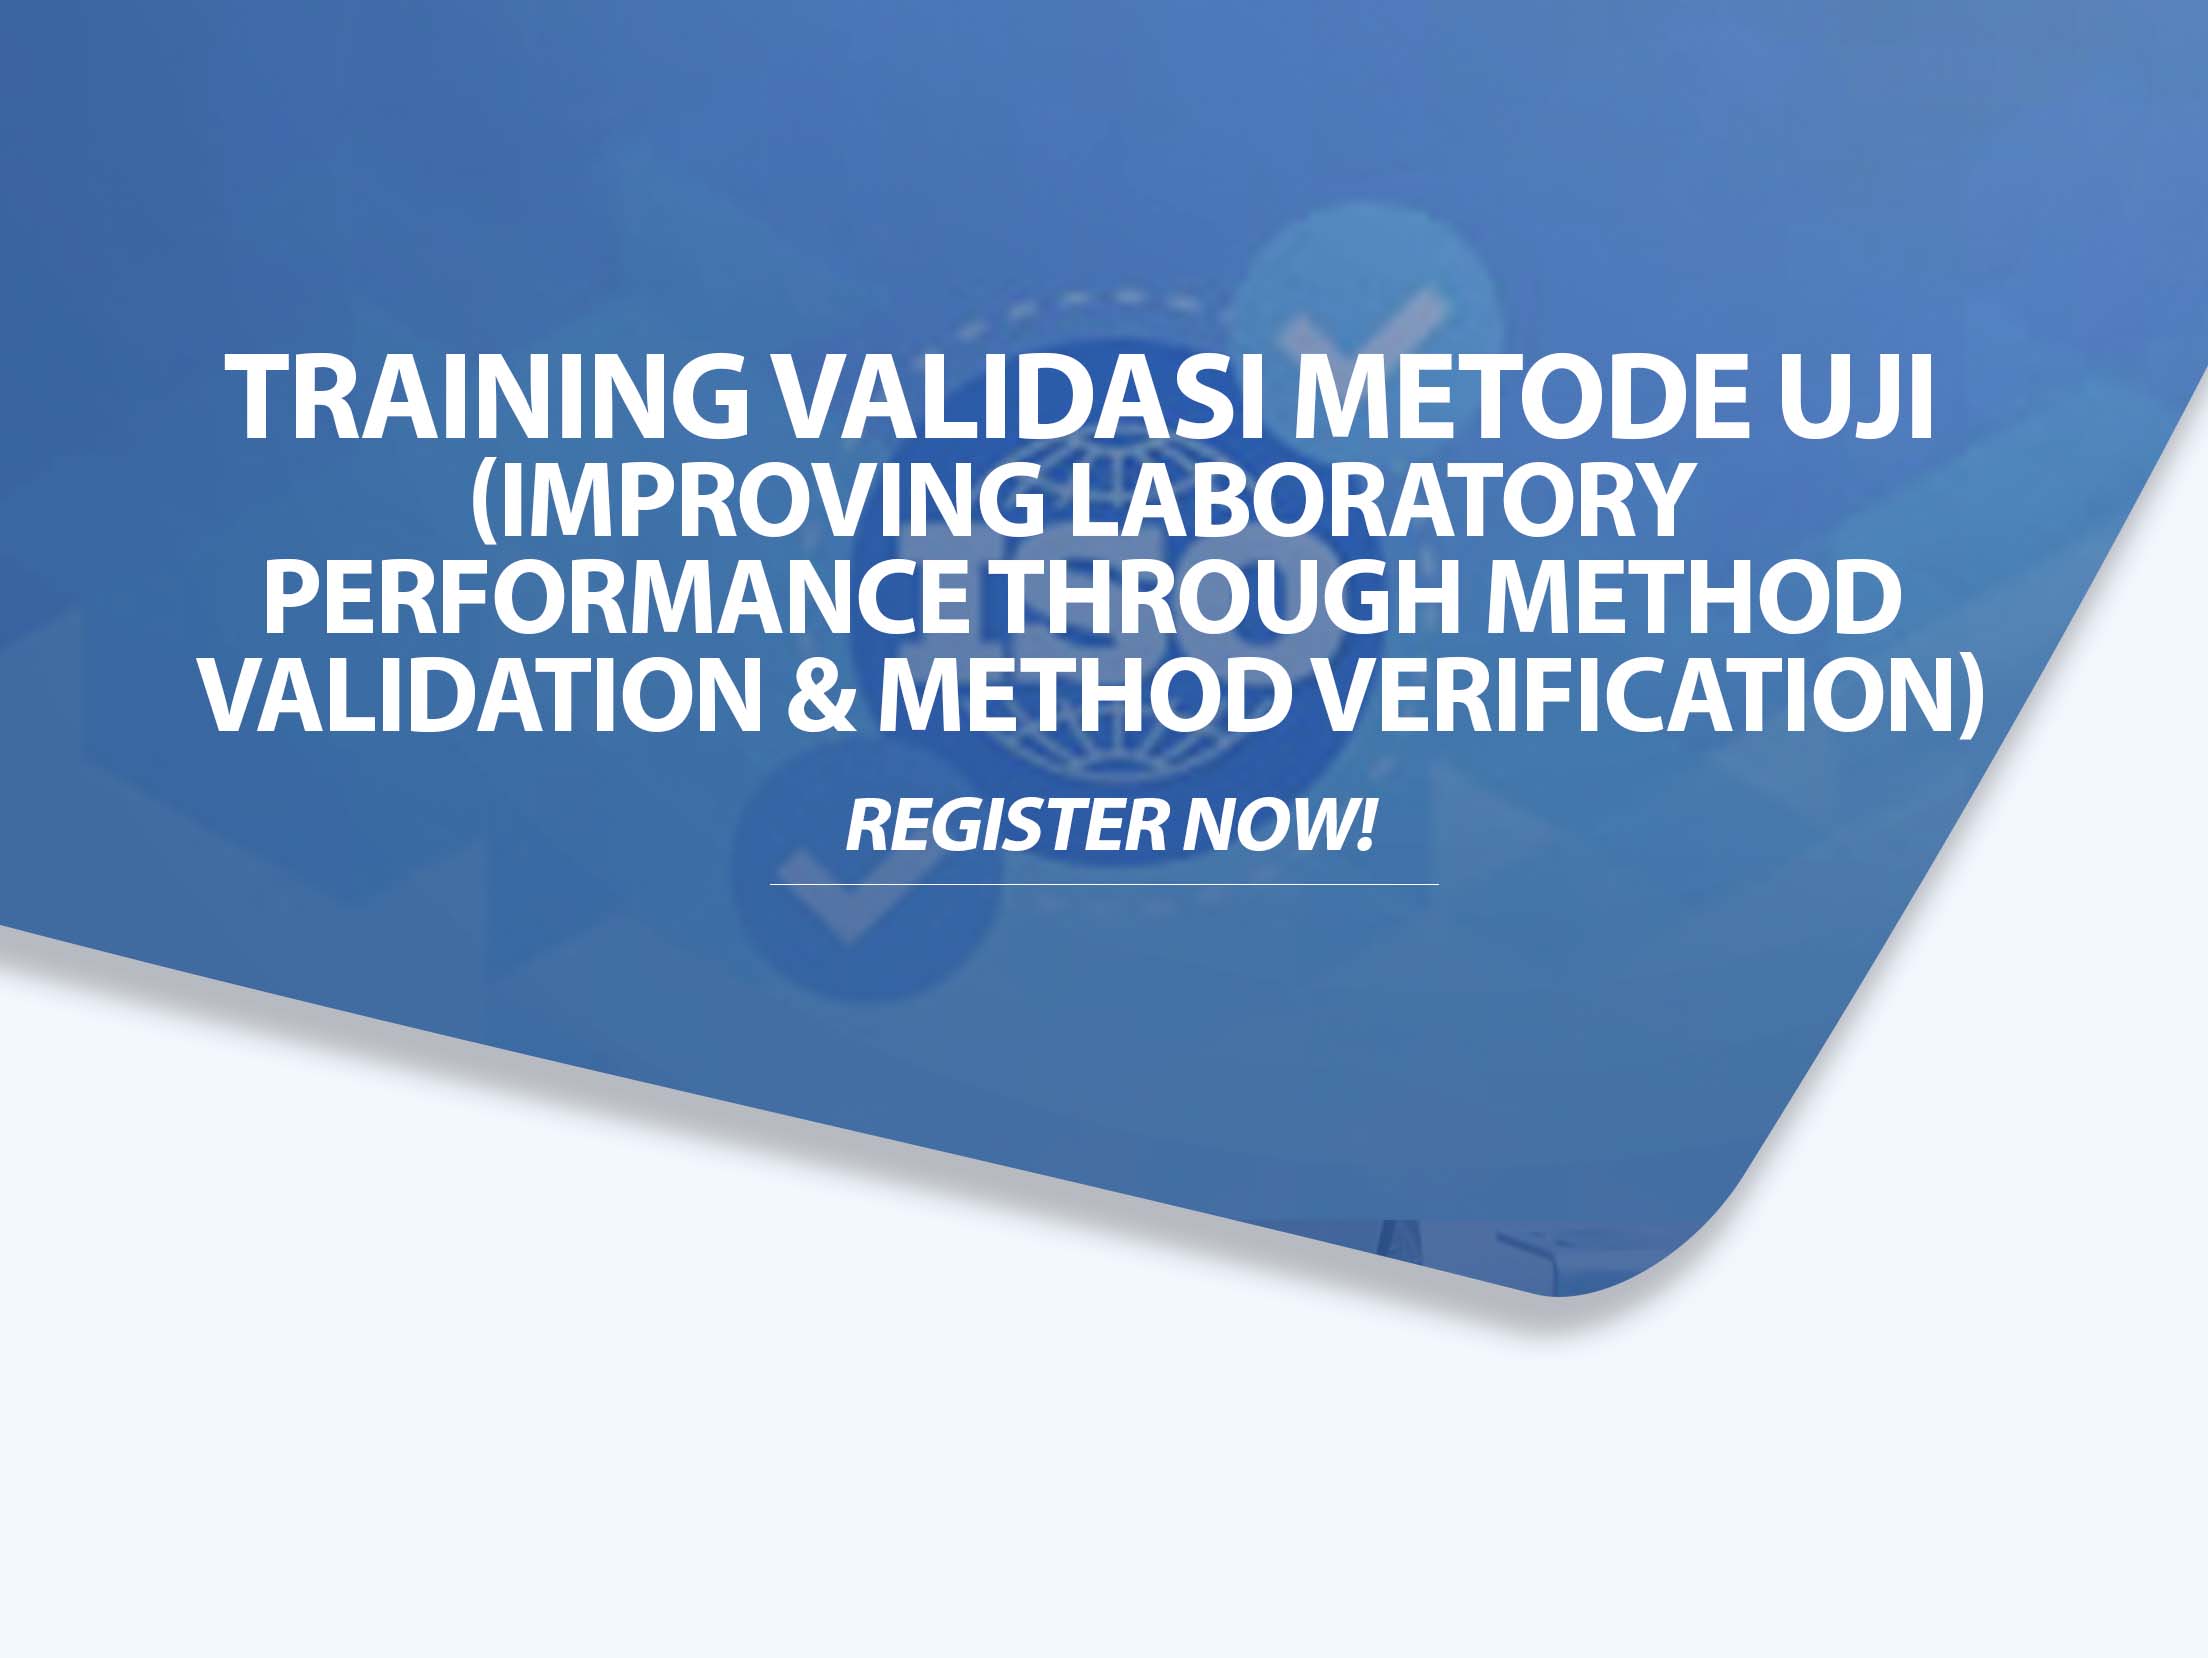 Training Validasi Metode Uji (Improving Laboratory Performance through Method Validation & Method Verification)